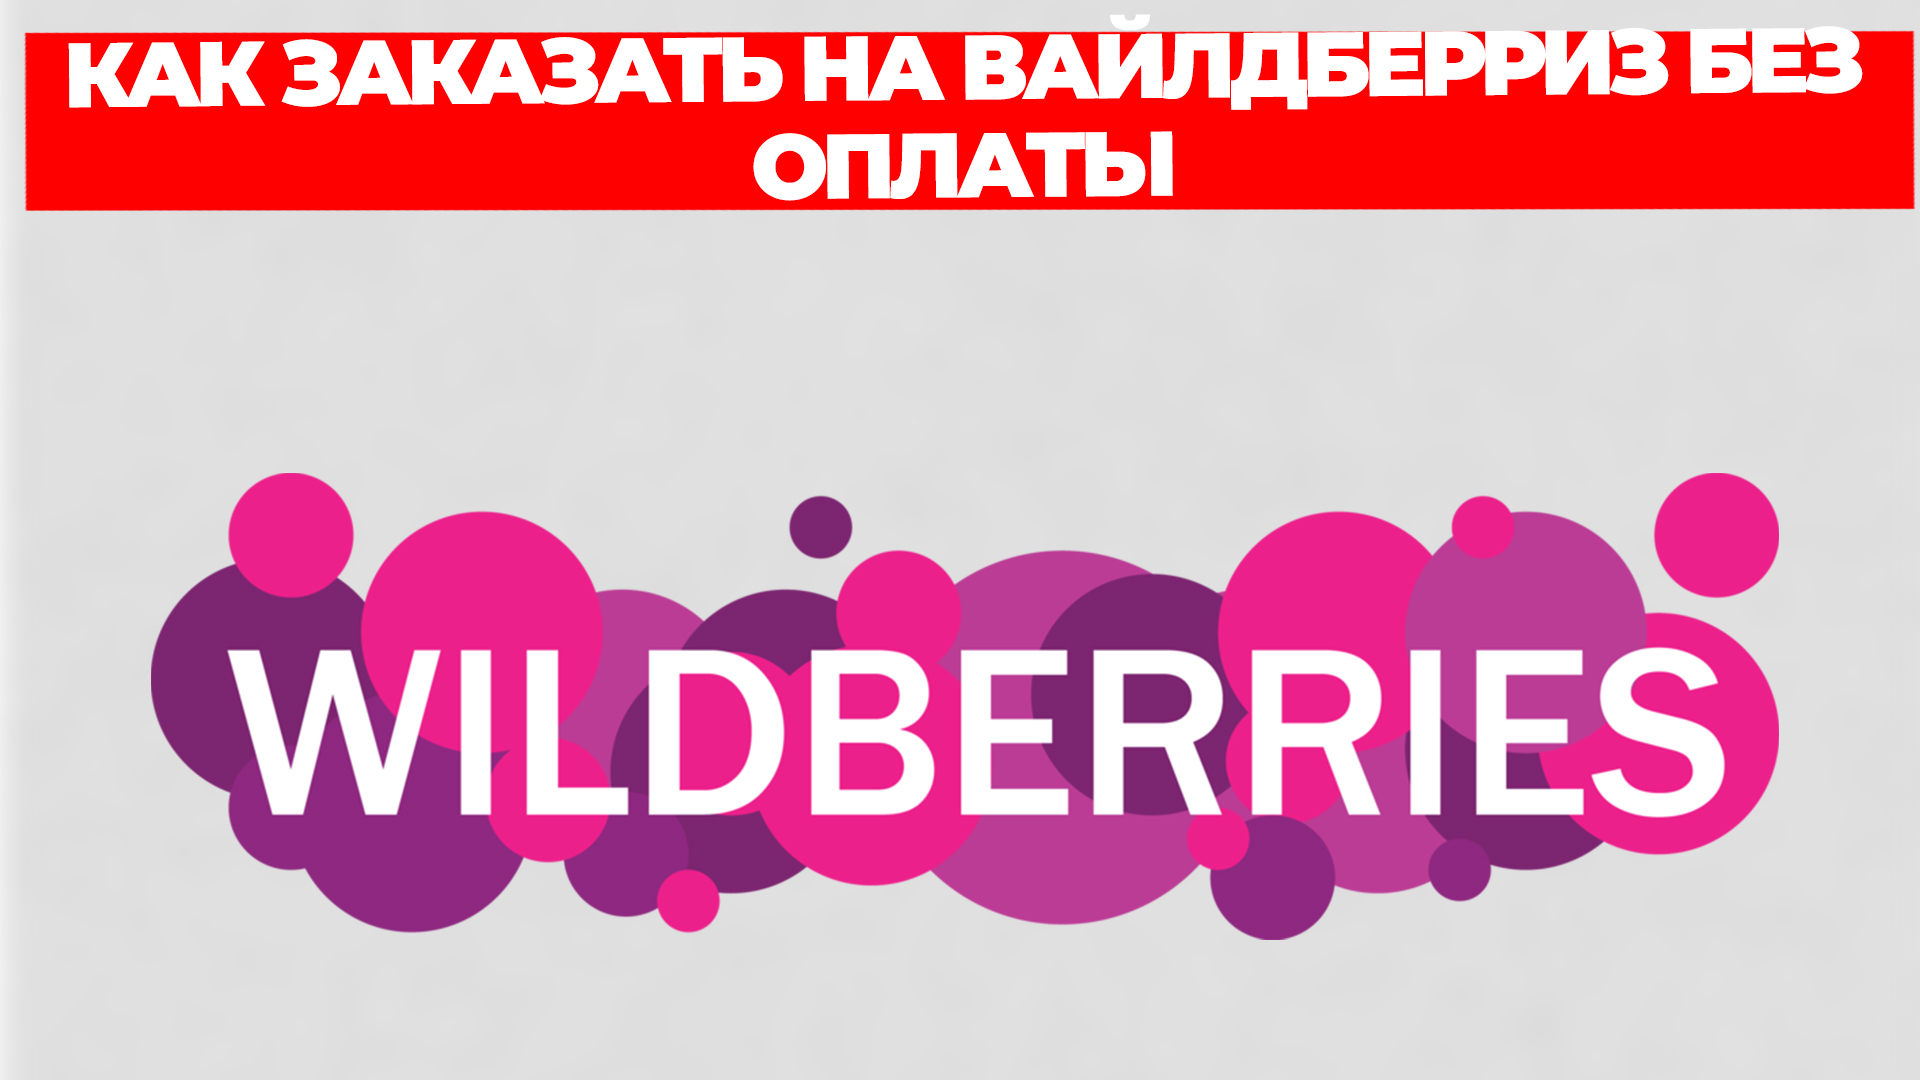 Wildberries 1 интернет магазины